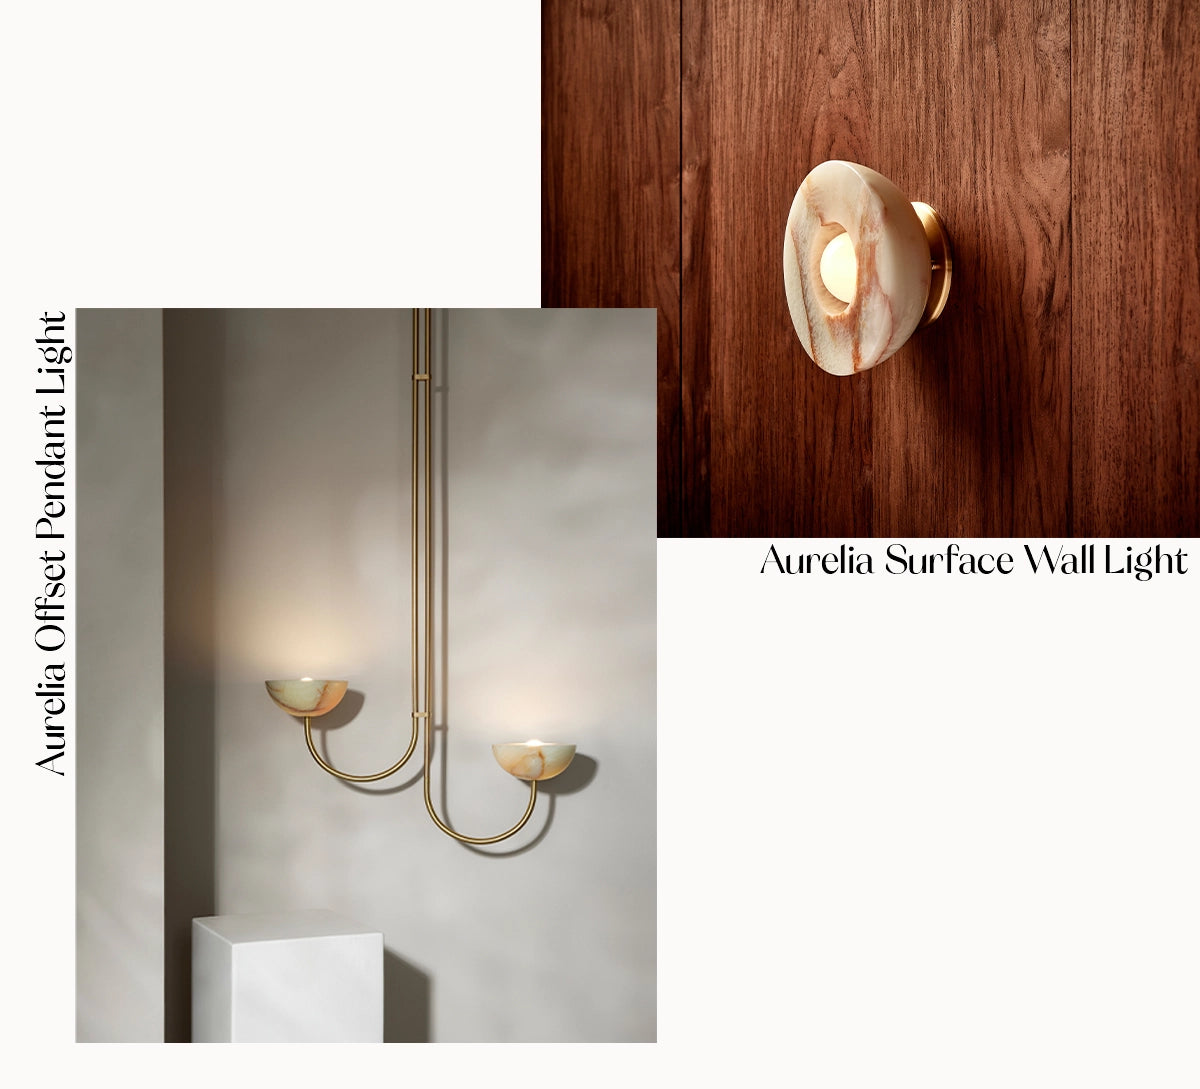 Aurelia Collection by Marz Design at Nook Collecitons